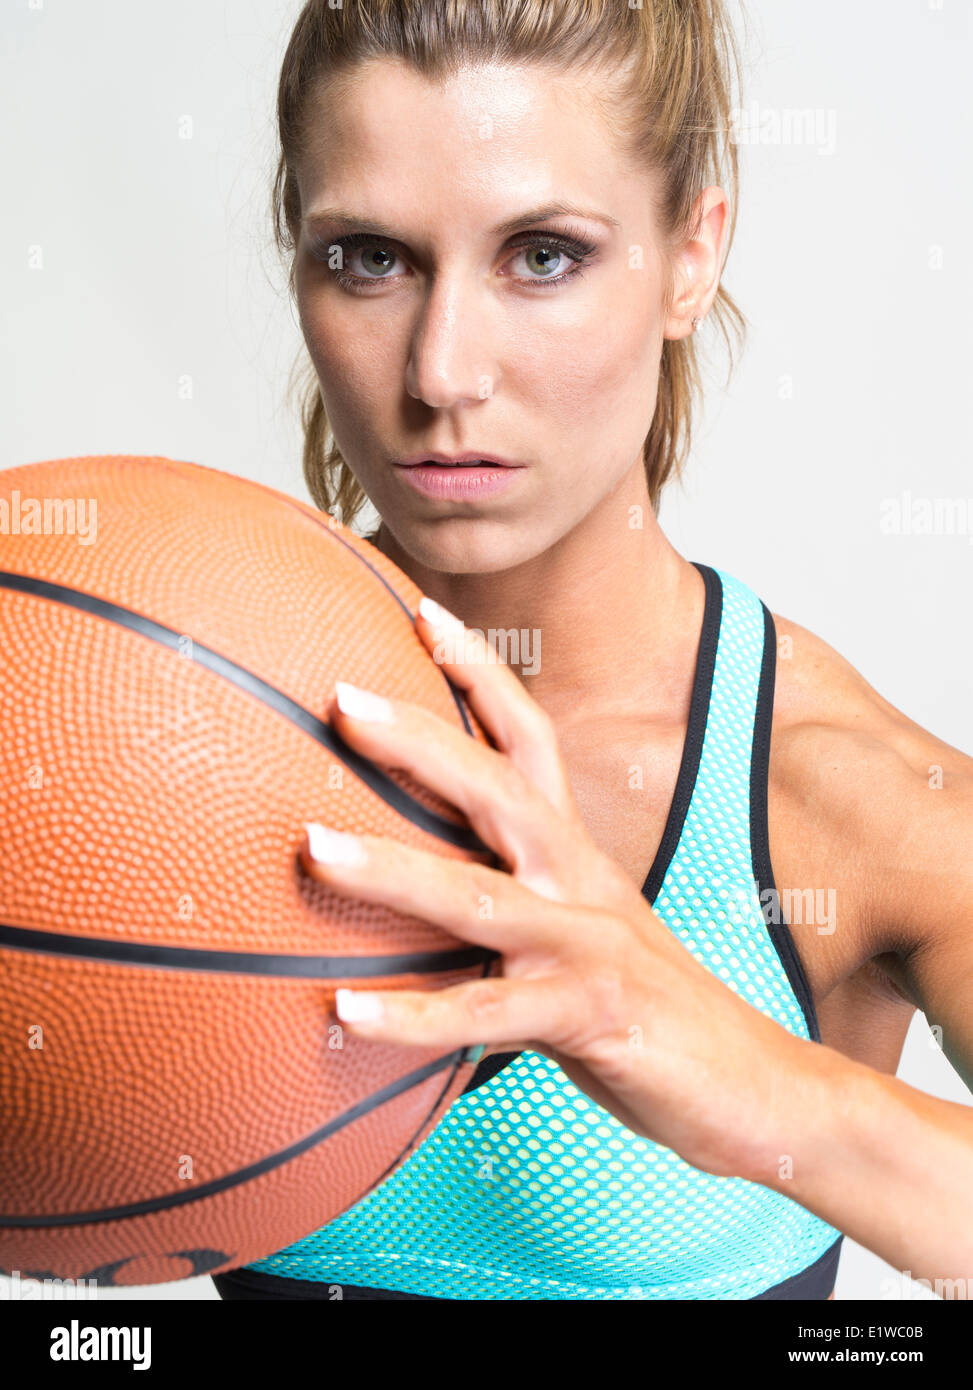 Muskulöse straff sportliche Frau - Basketballspieler Stockfoto